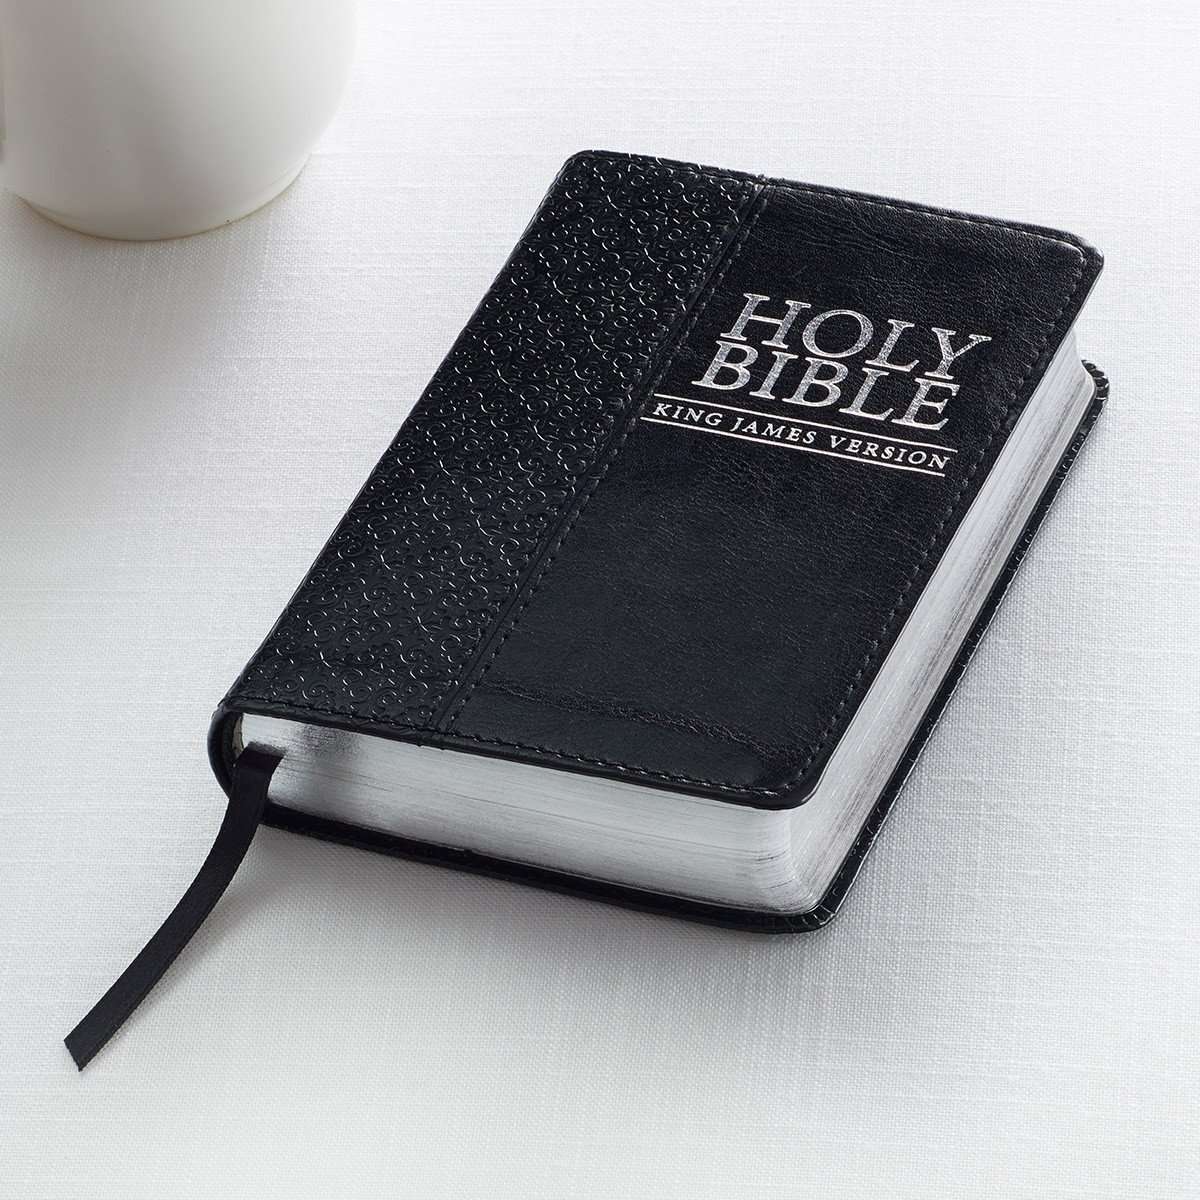 Black Faux Leather King James Version Pocket Bible